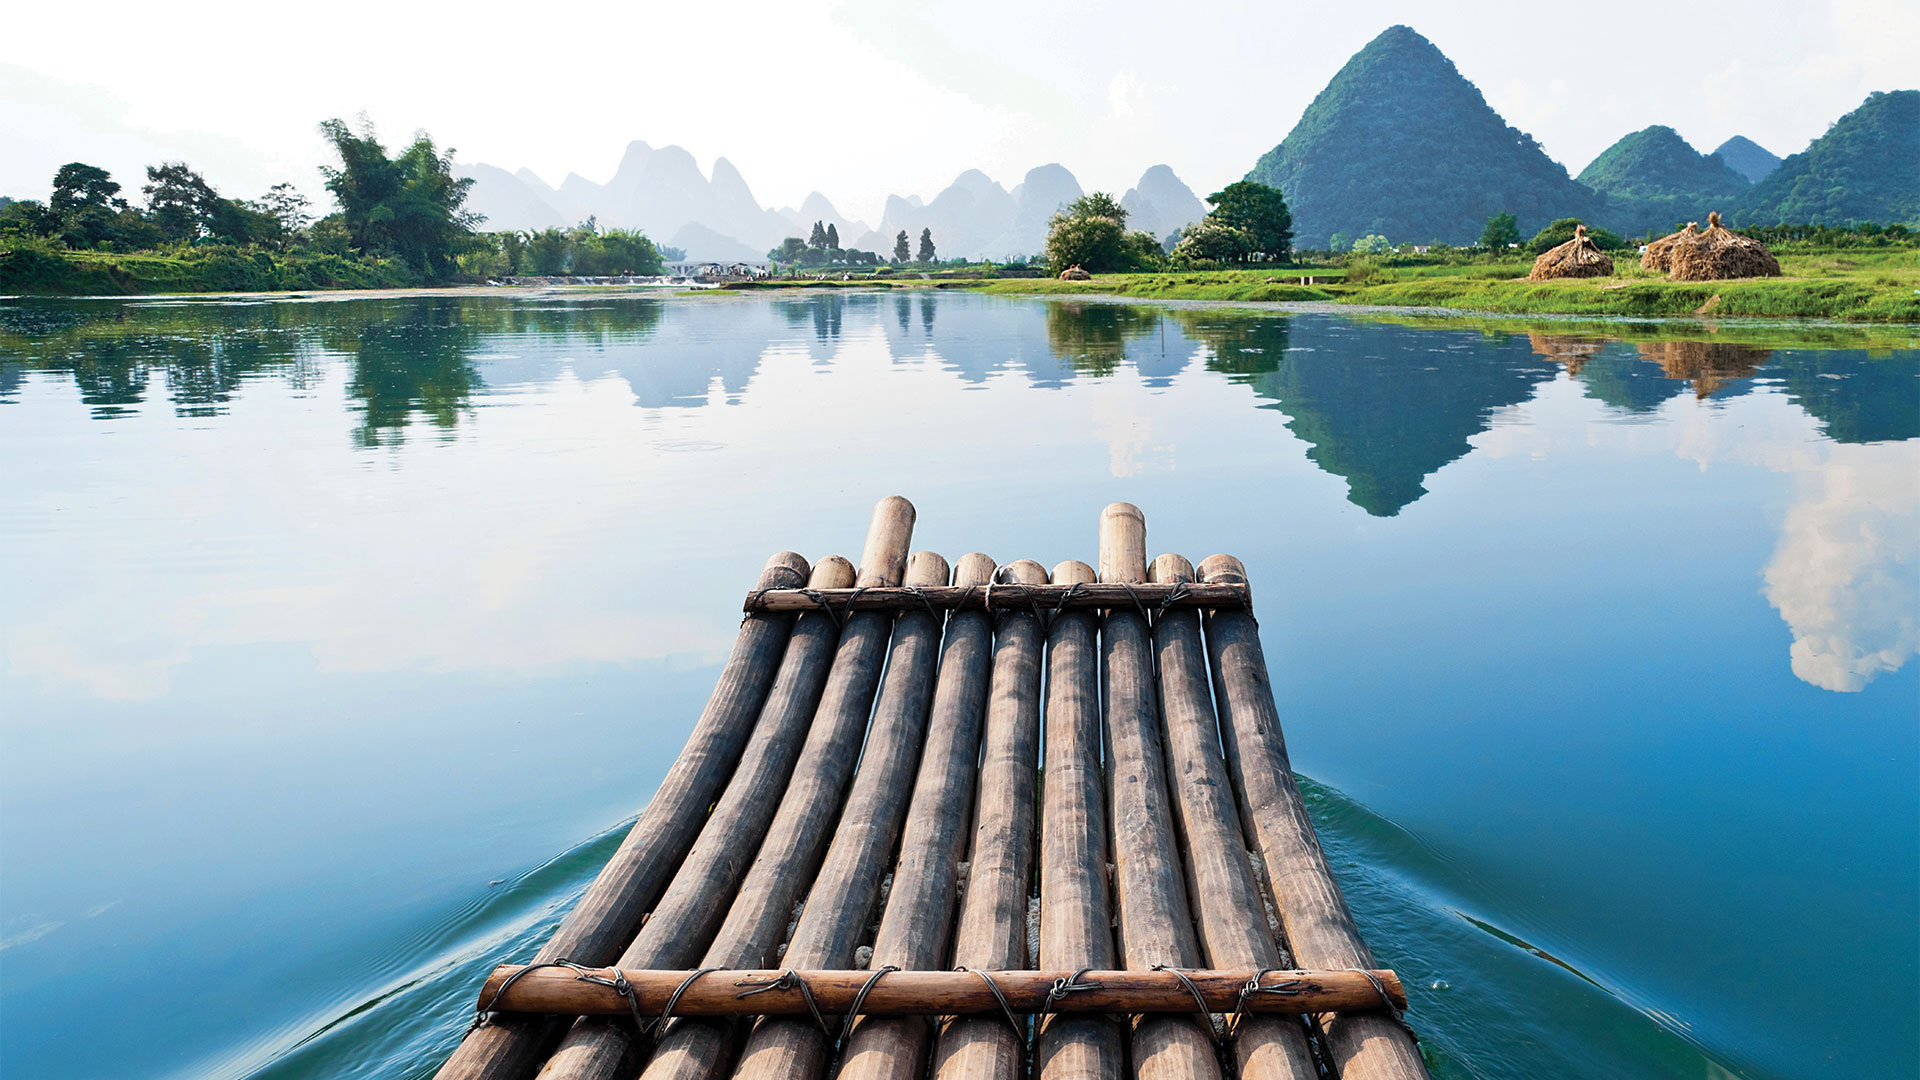 Wooden raft floating on still lake